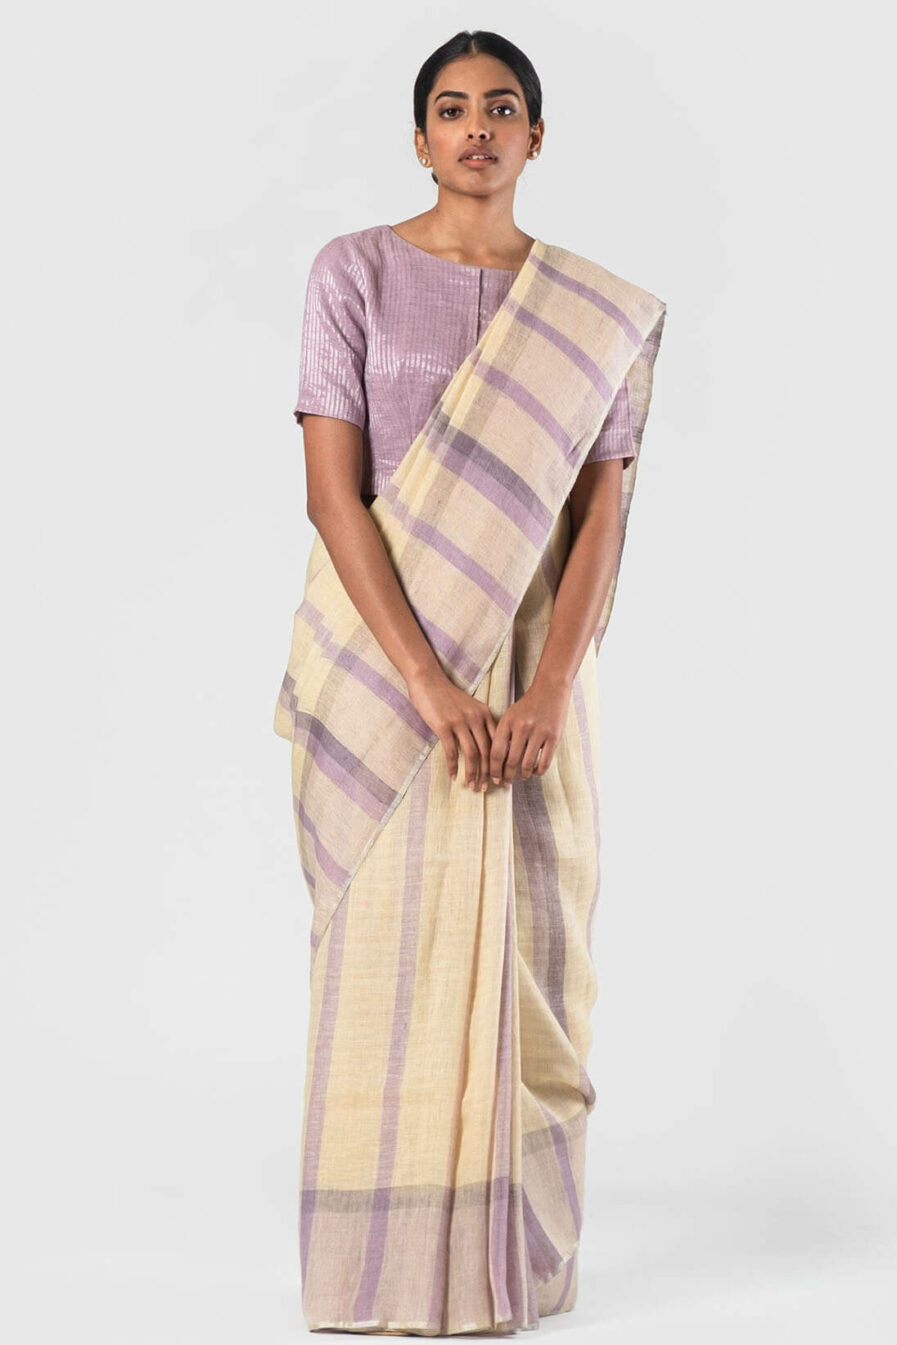 Anavila Lavender-Vanilla Natural plaid summer linen sari